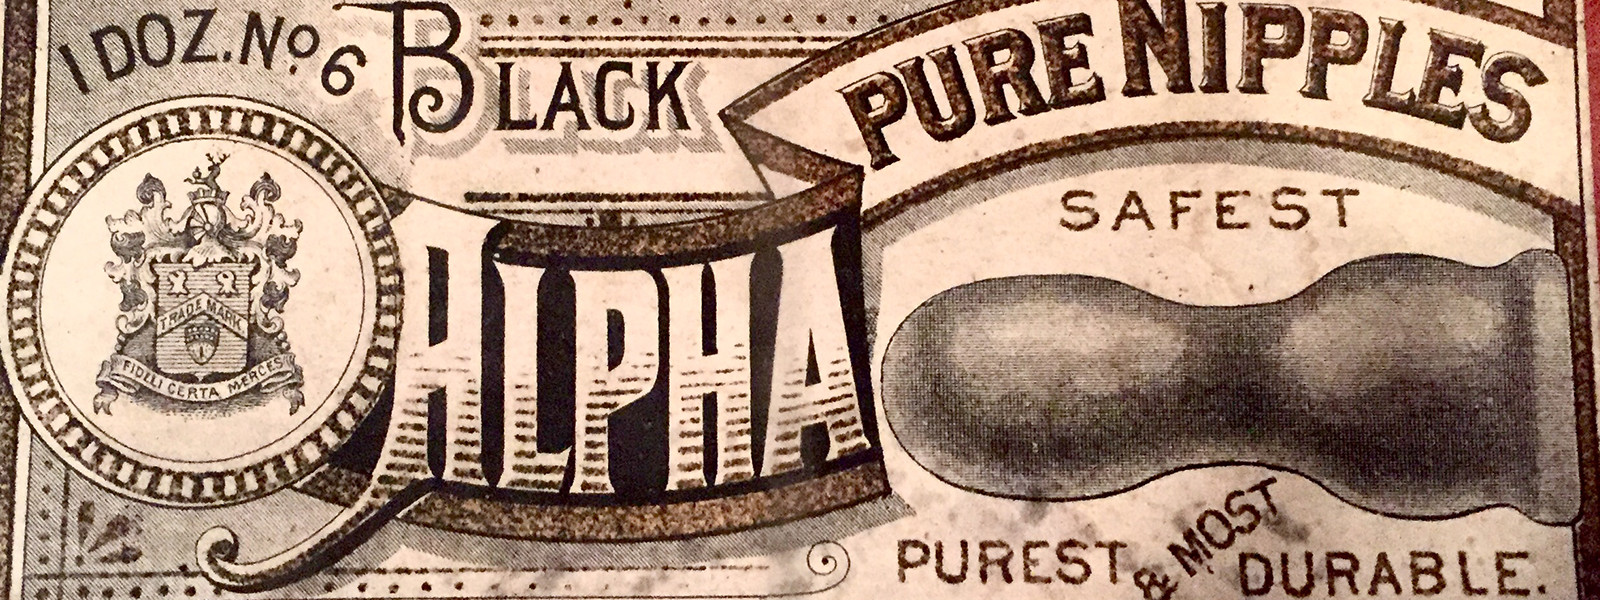 Old medicine label - found type